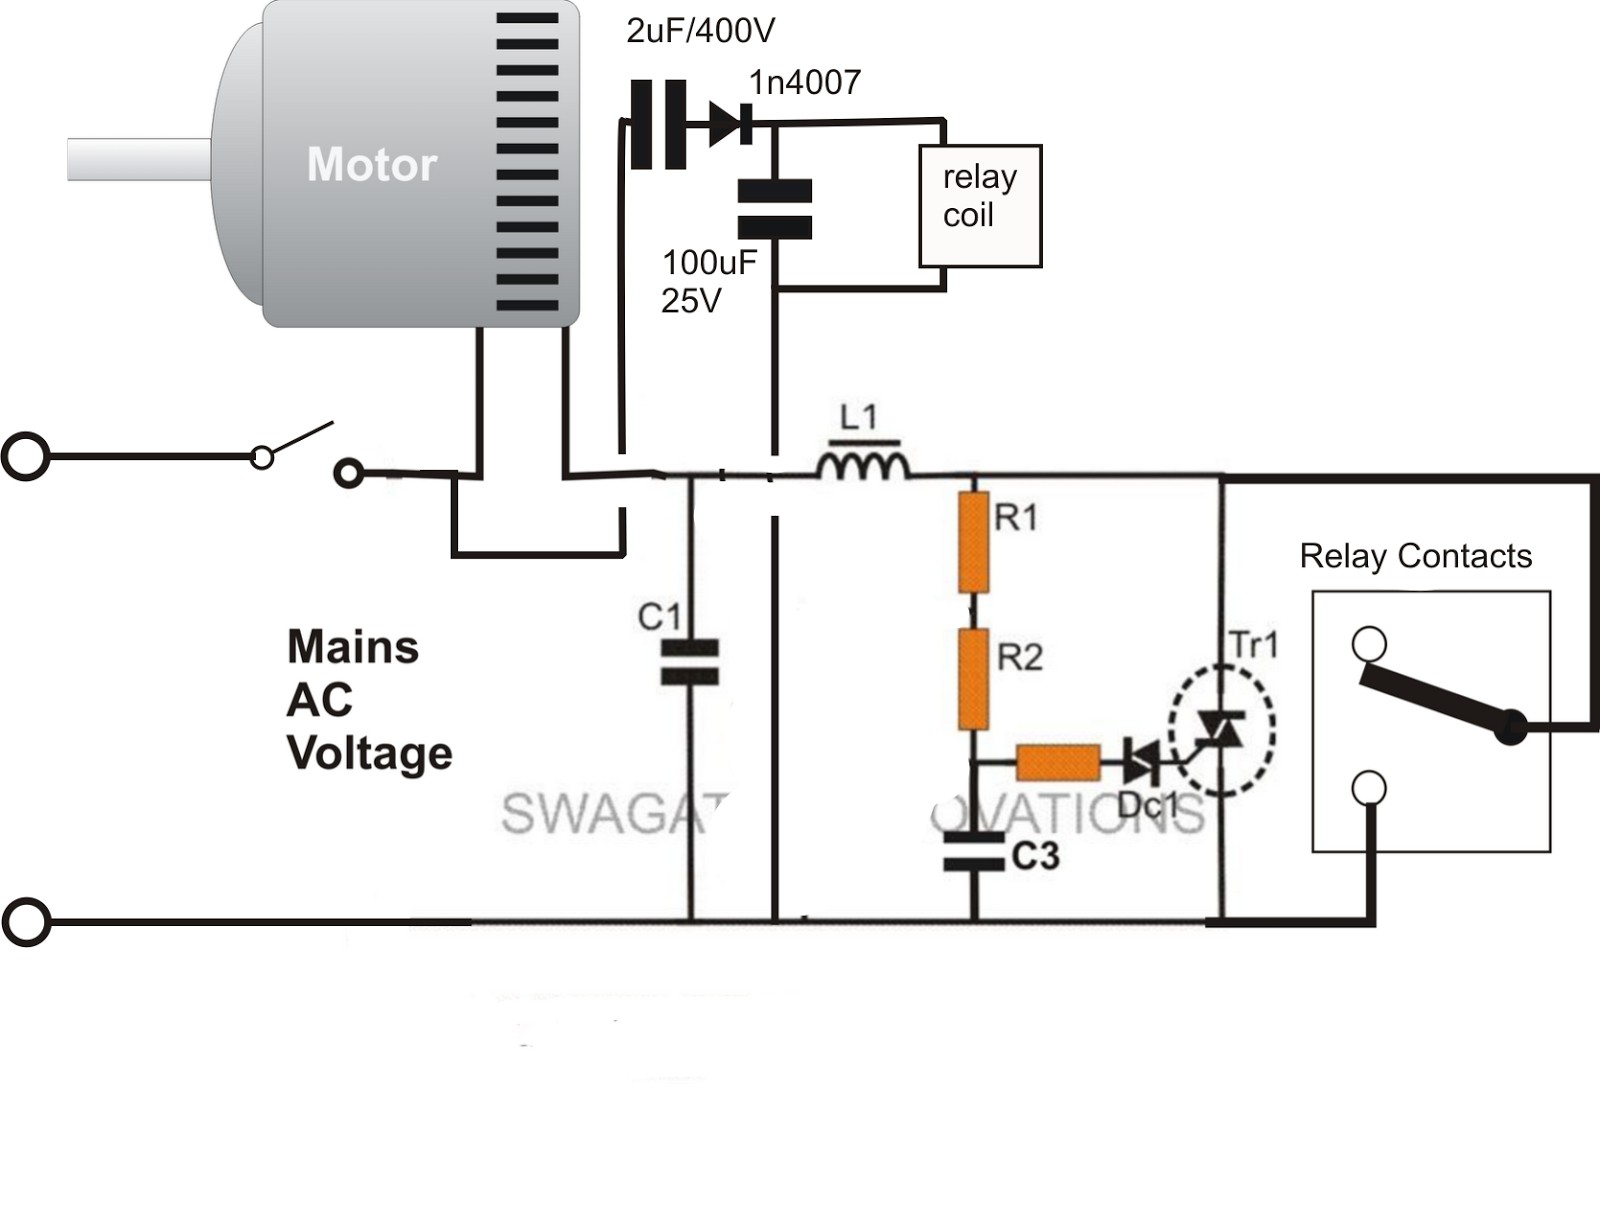 Well Pump Control Box Wiring Diagram Well Pump Control Box Wiring Diagram Exatinfo Of Well Pump Control Box Wiring Diagram